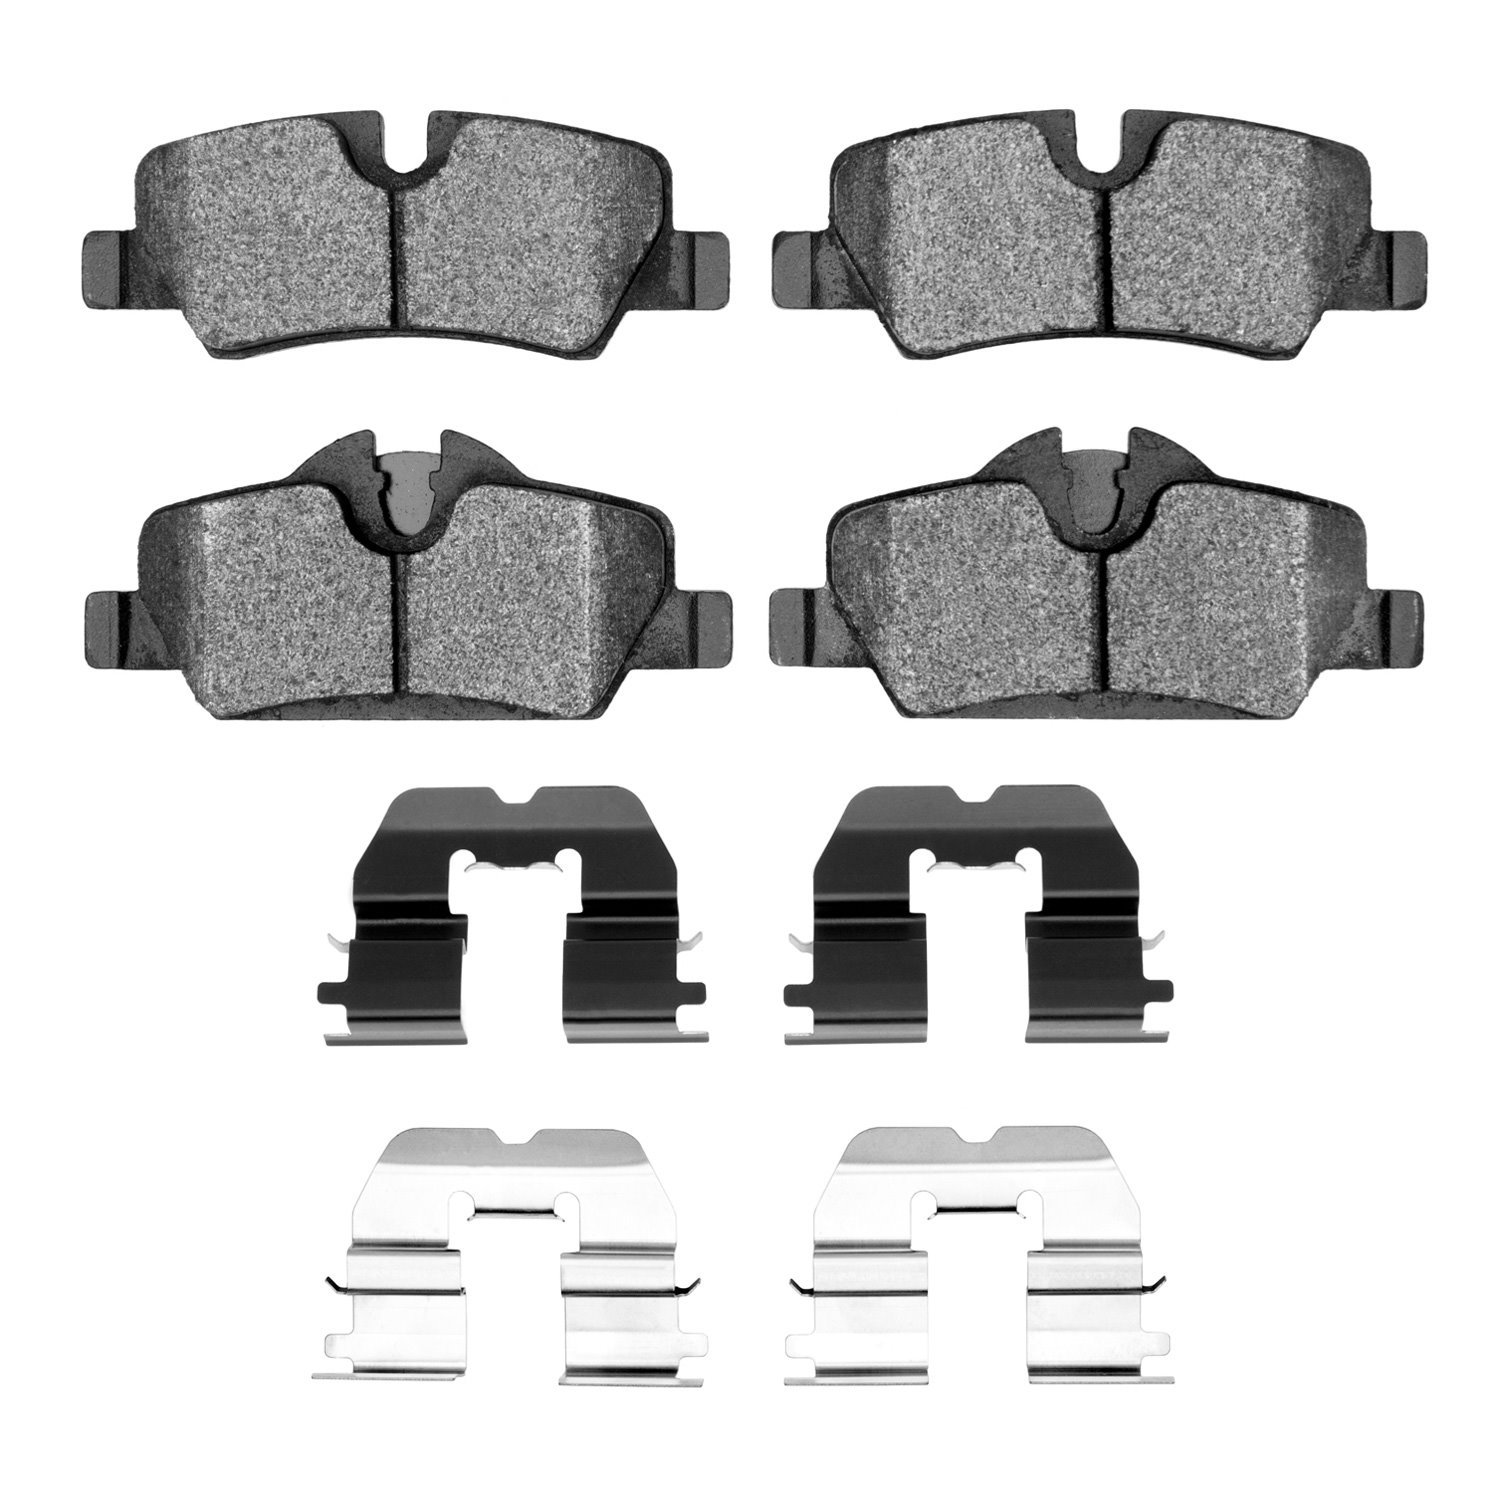 1552-1800-01 5000 Advanced Low-Metallic Brake Pads & Hardware Kit, Fits Select Mini, Position: Rear